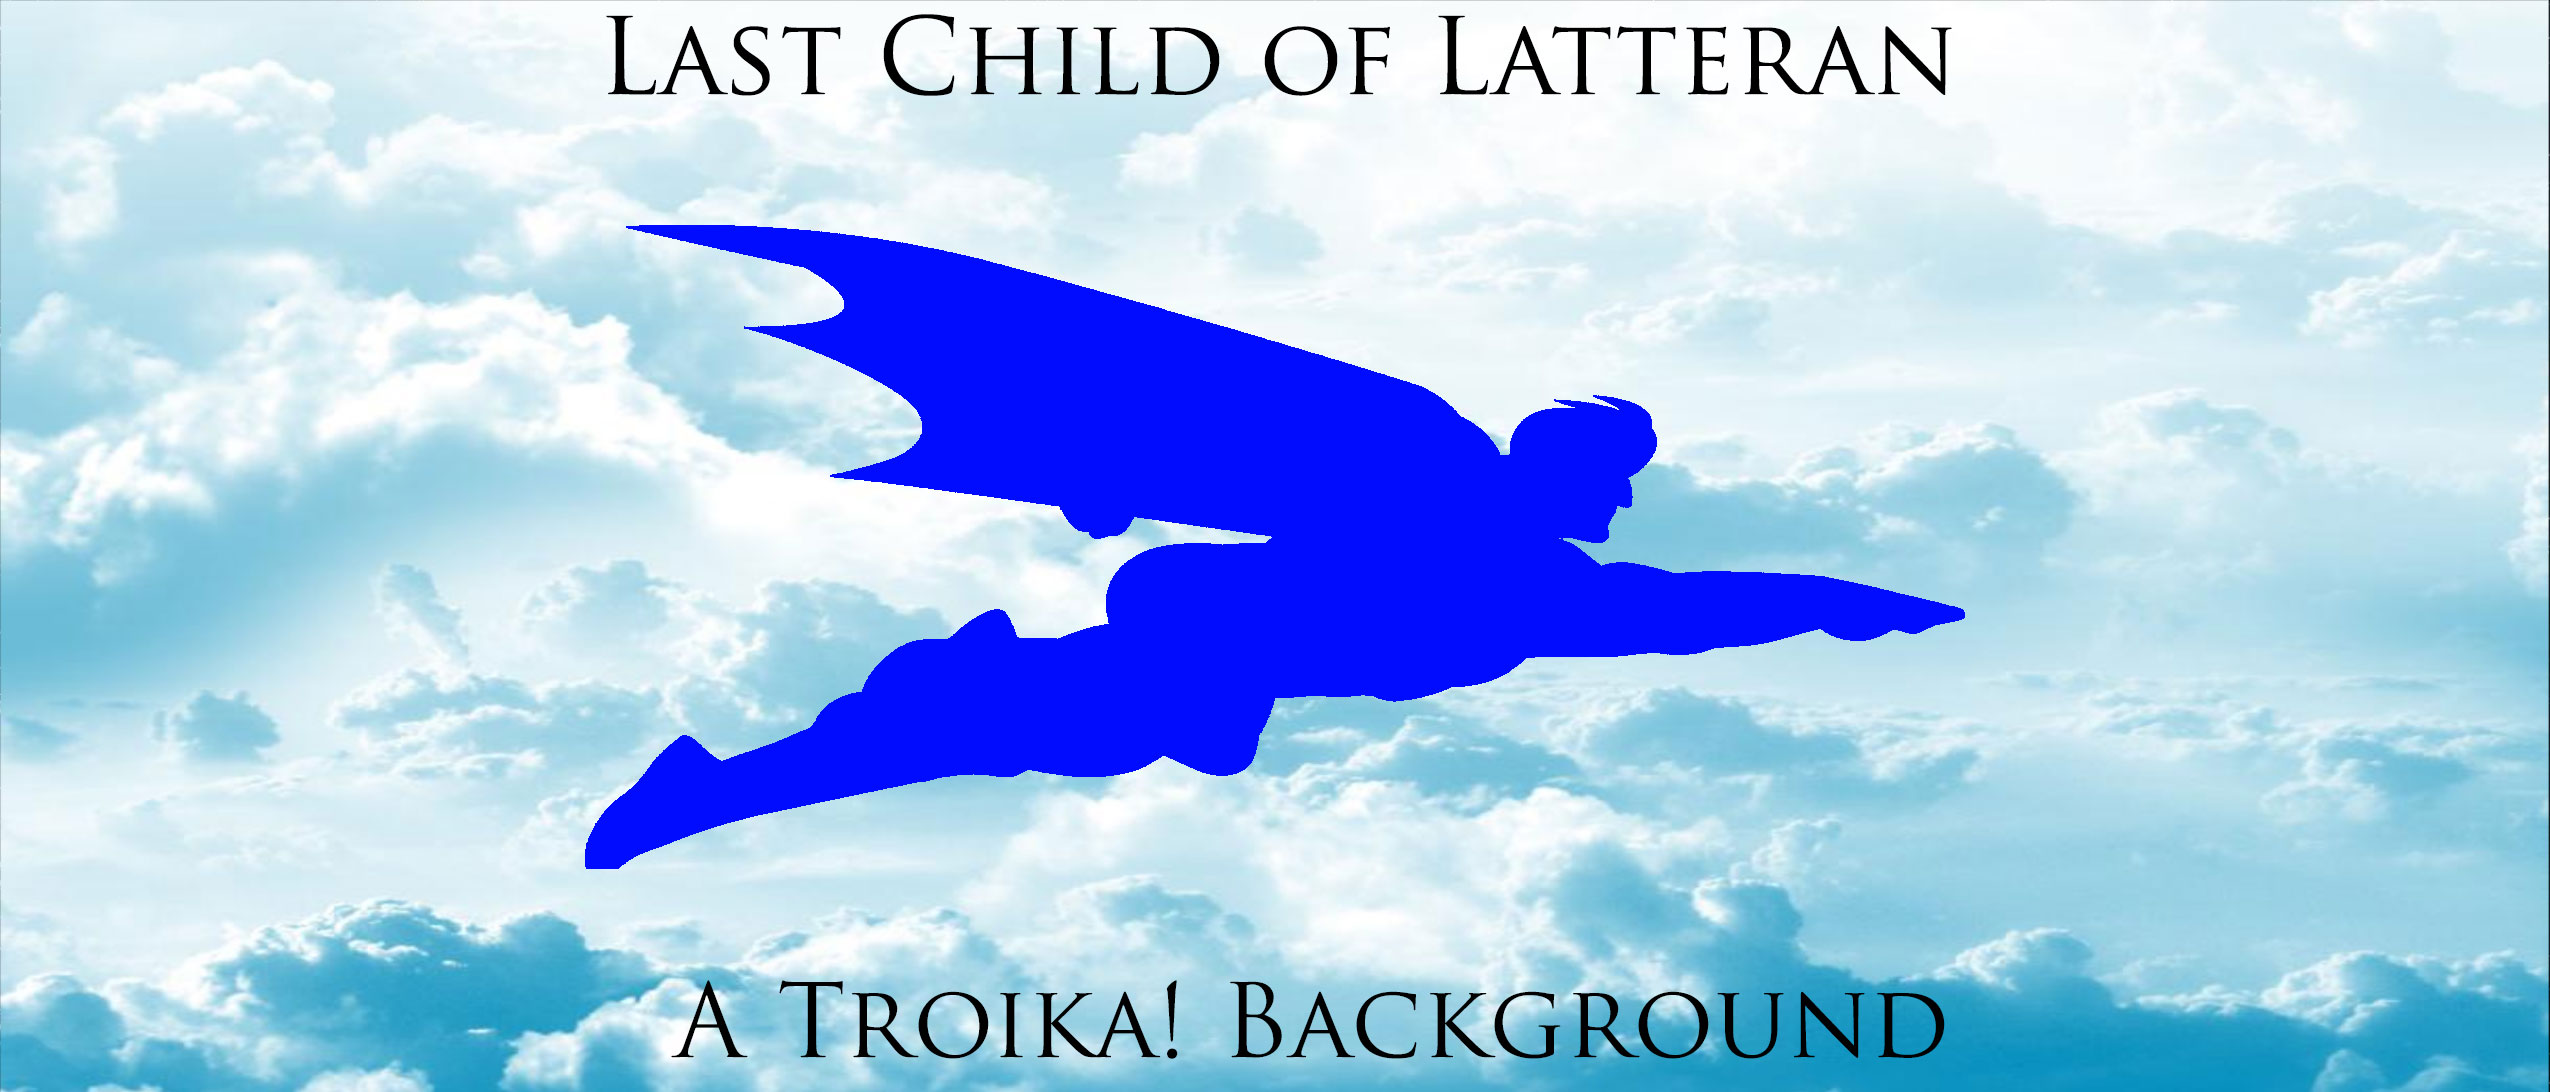 Last Child of Latteran - A Troika! Background